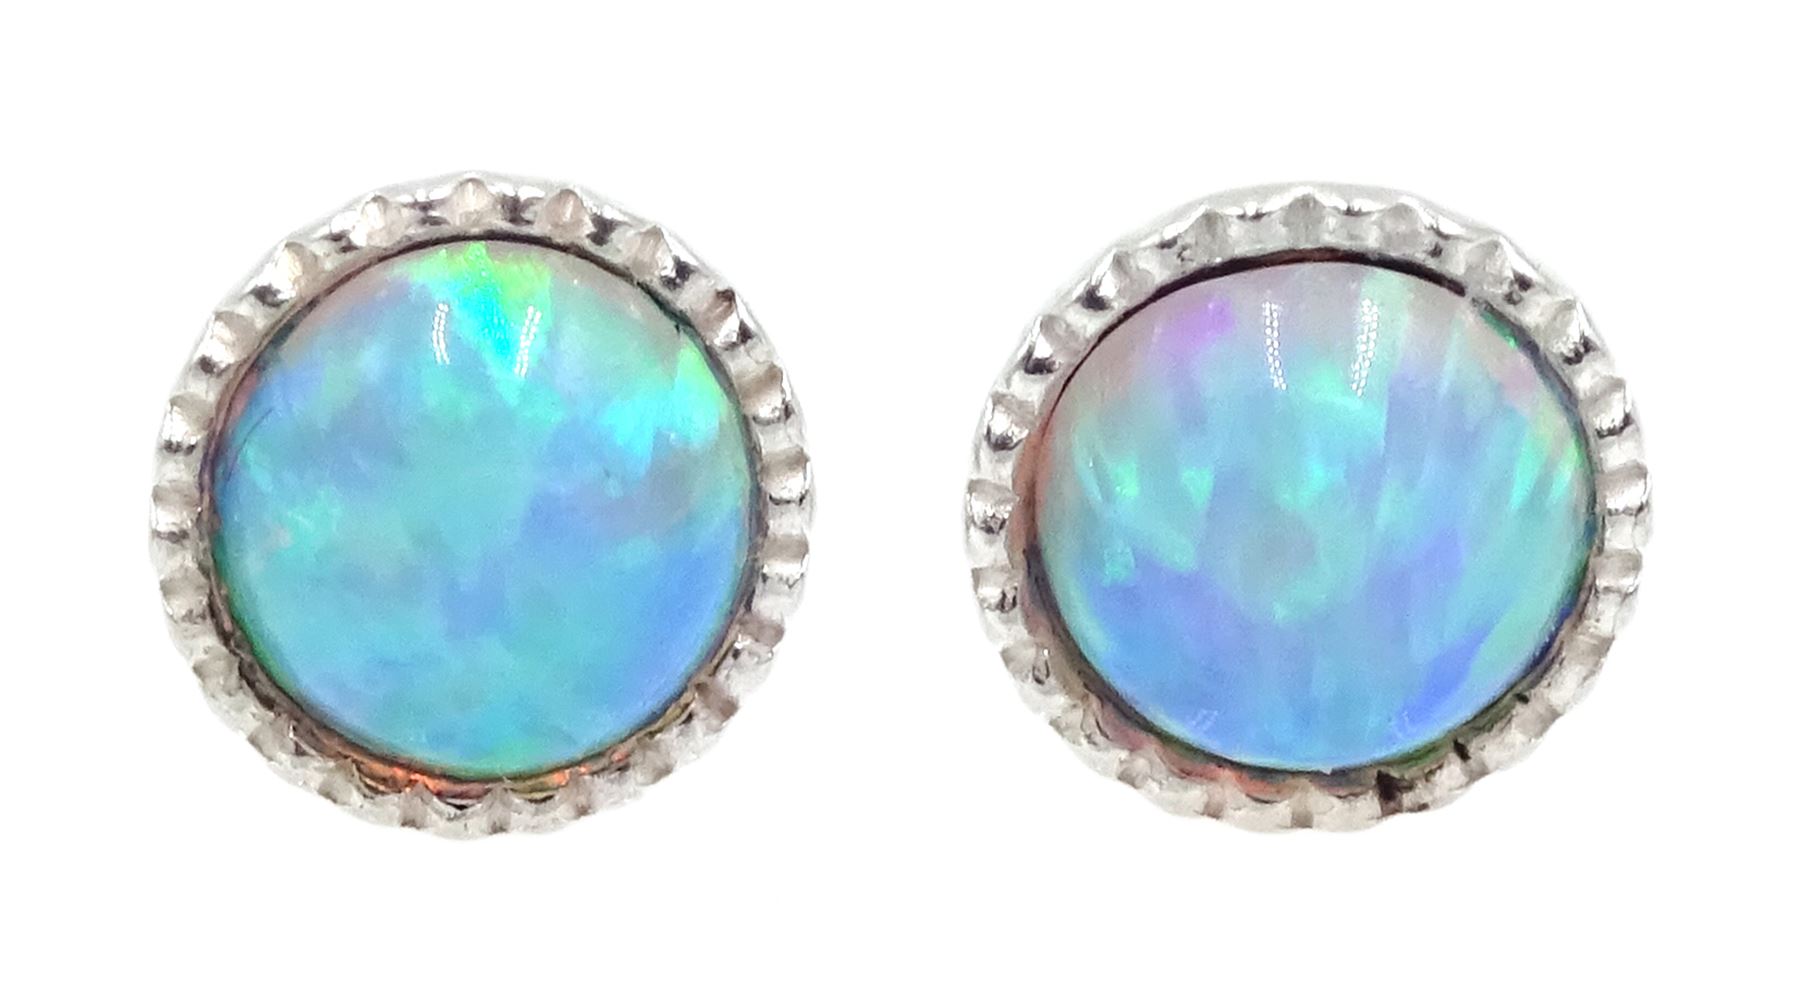 Pair of silver and opal circular stud earrings